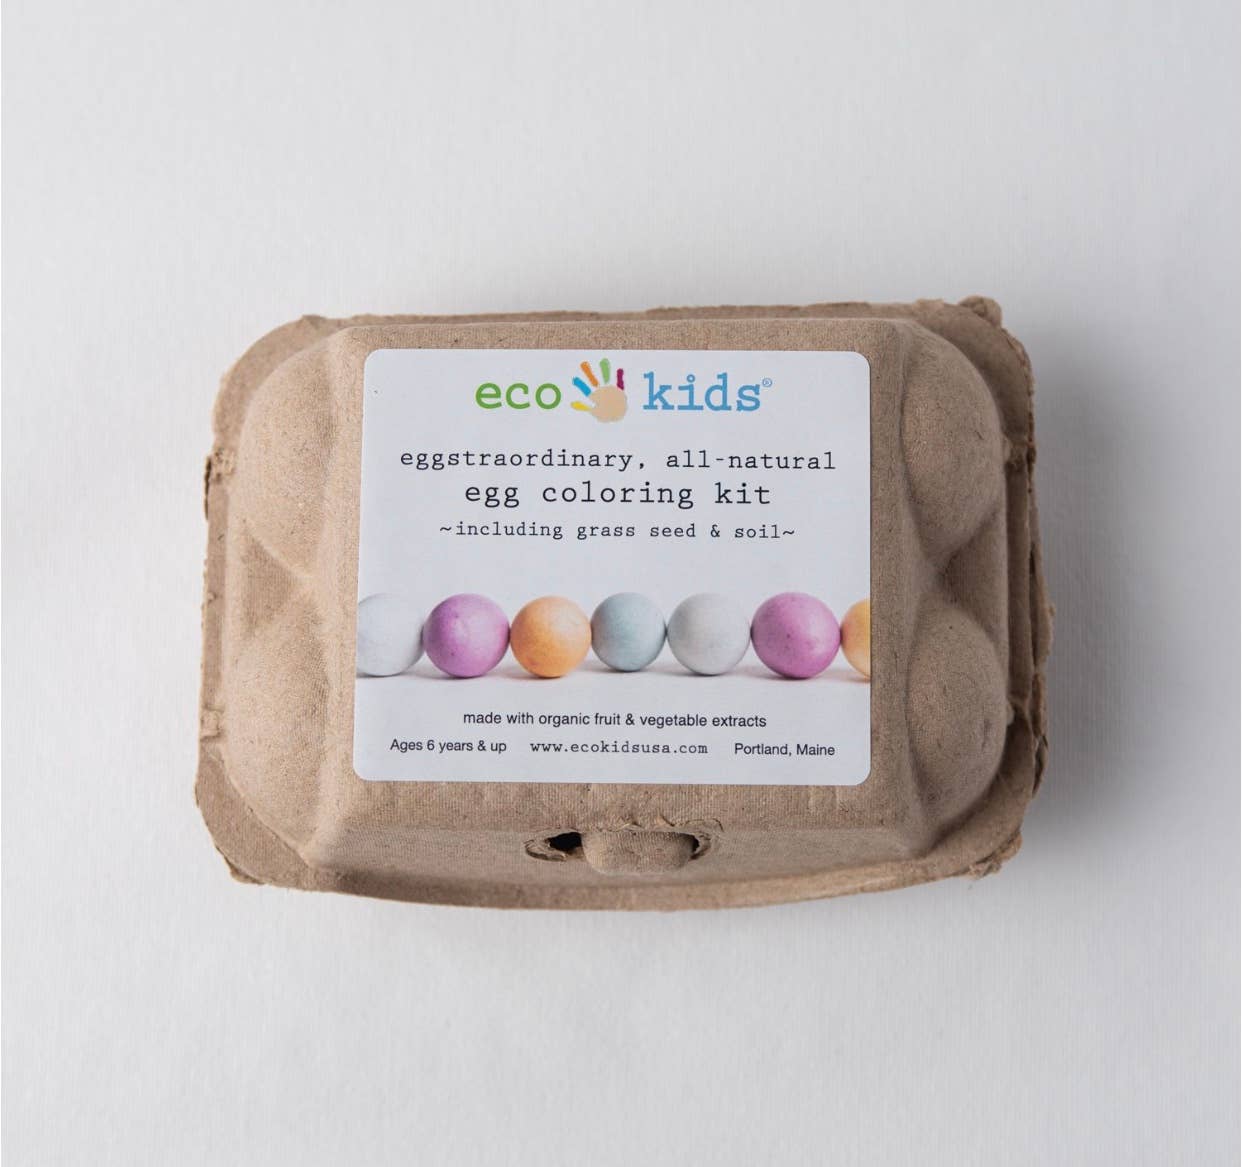 Easter Egg Coloring Kit